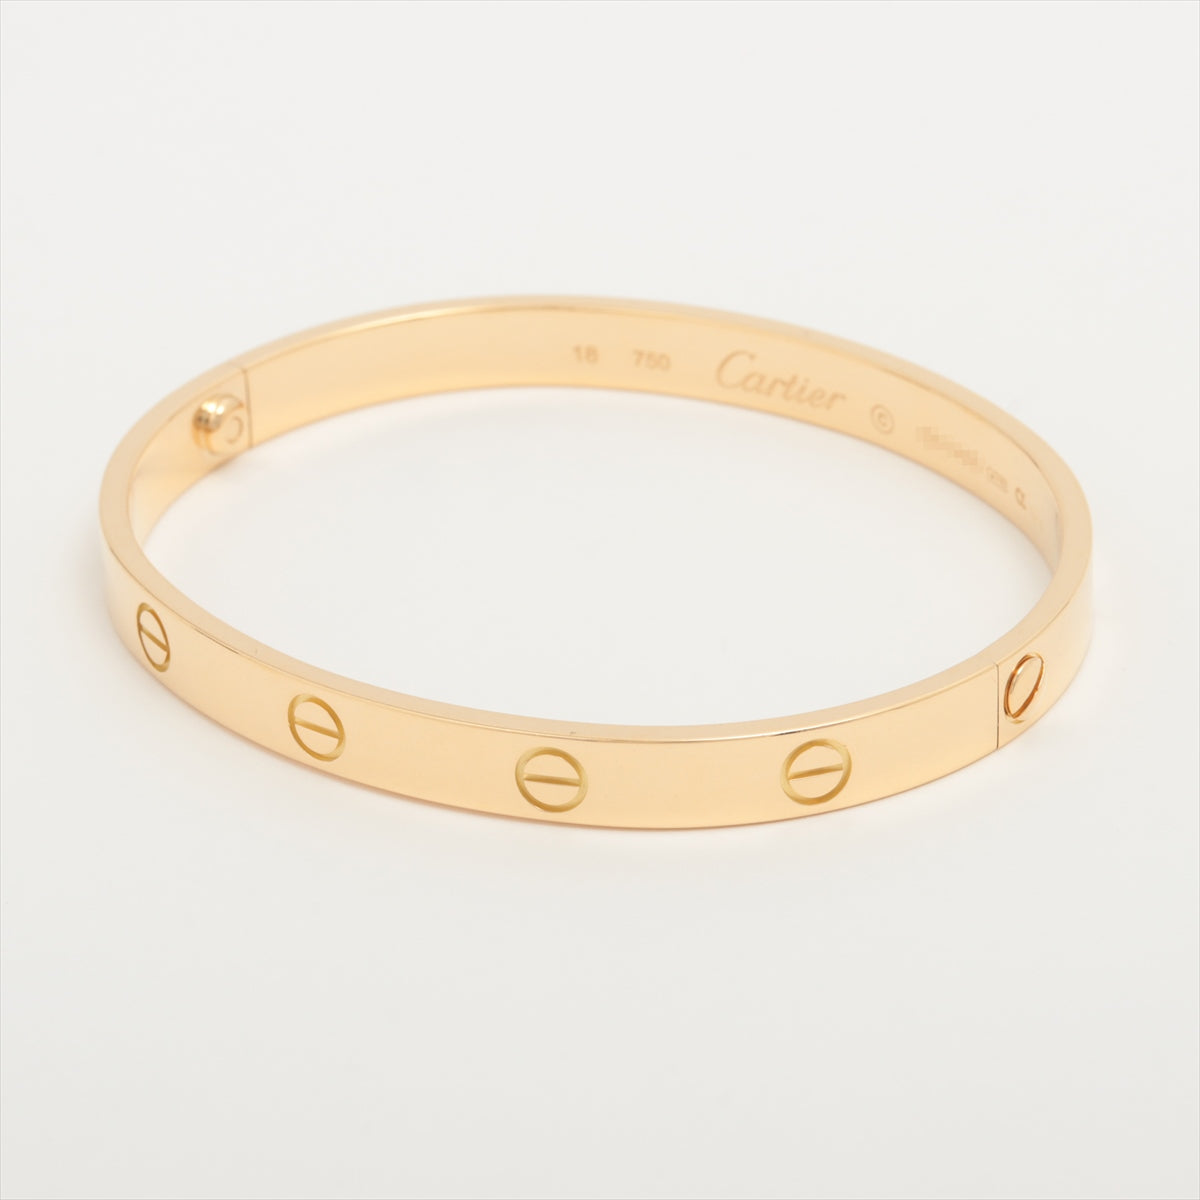 Cartier Yellow Gold LOVE Bracelet for Men+Free Screwdriver (REF: B6035516)  - Cartier Love Bracelets - Cartier Jewelry